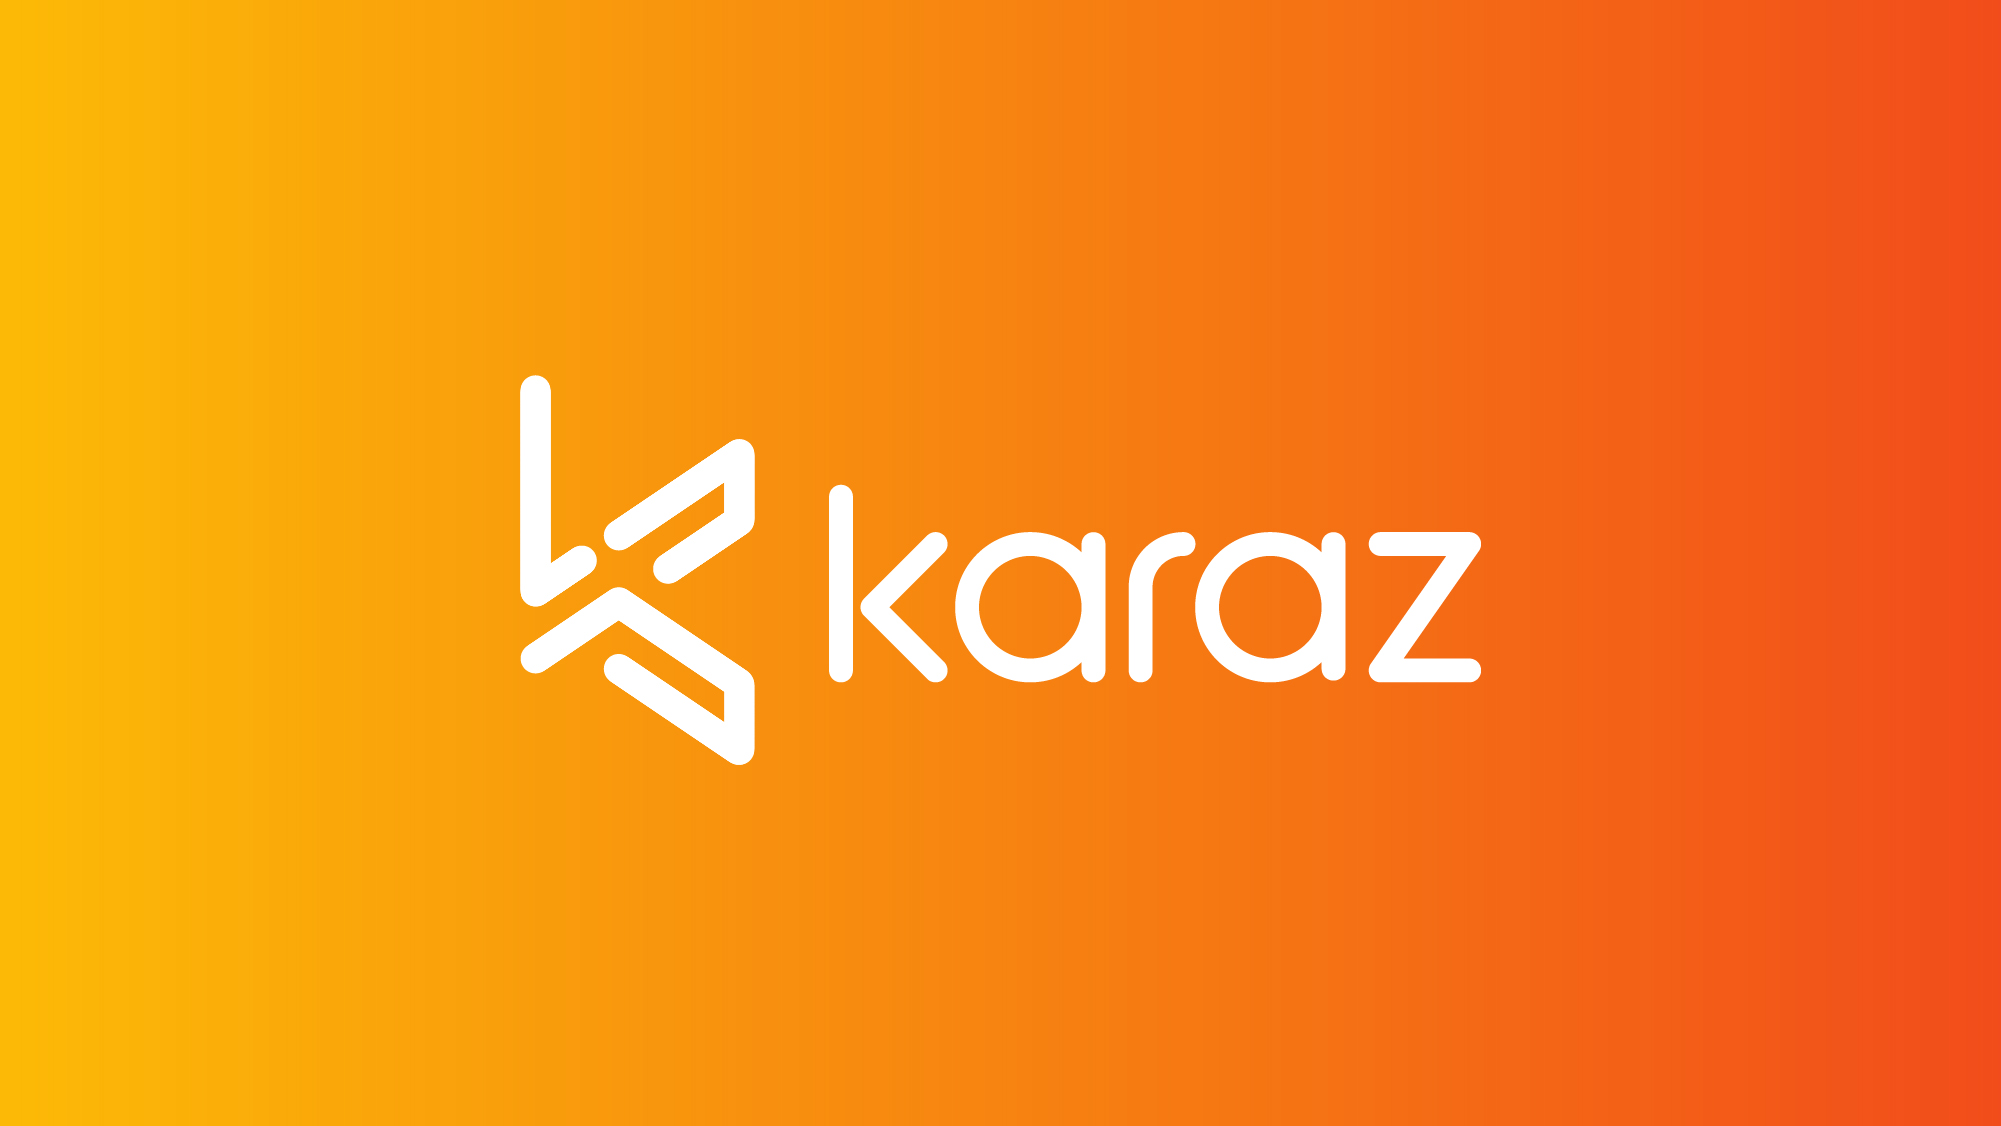 Karaz-Branding-By-Millimeter-Creative-Agency-11